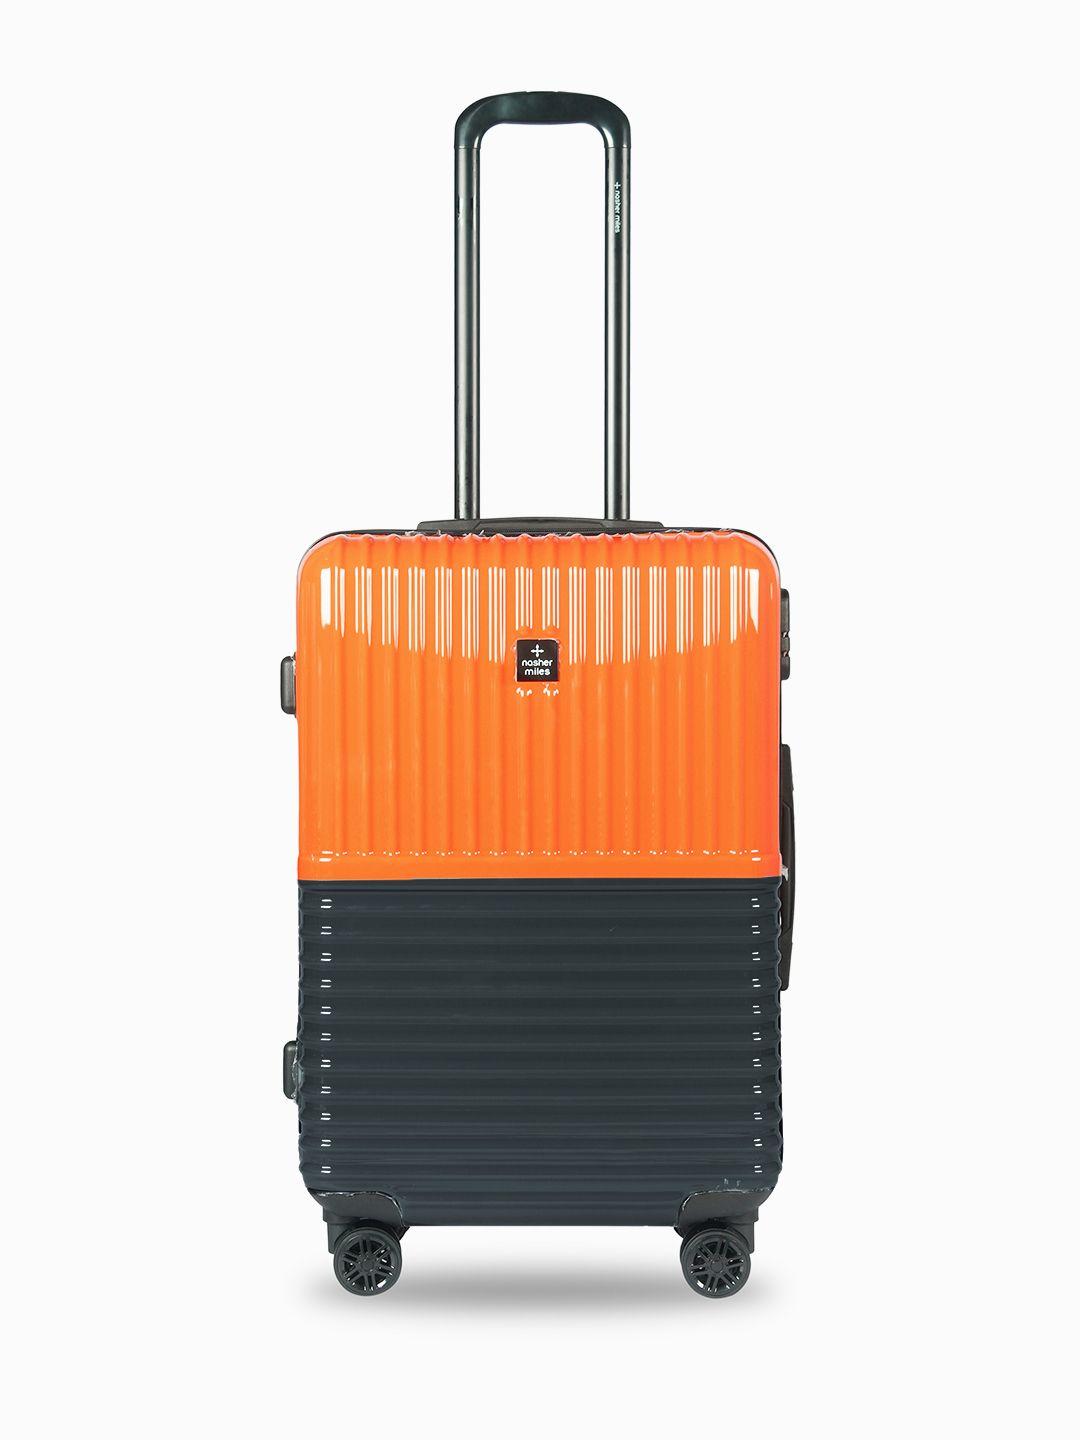 nasher-miles-orange-colorblocked-check-in-trolley-bag-65cm